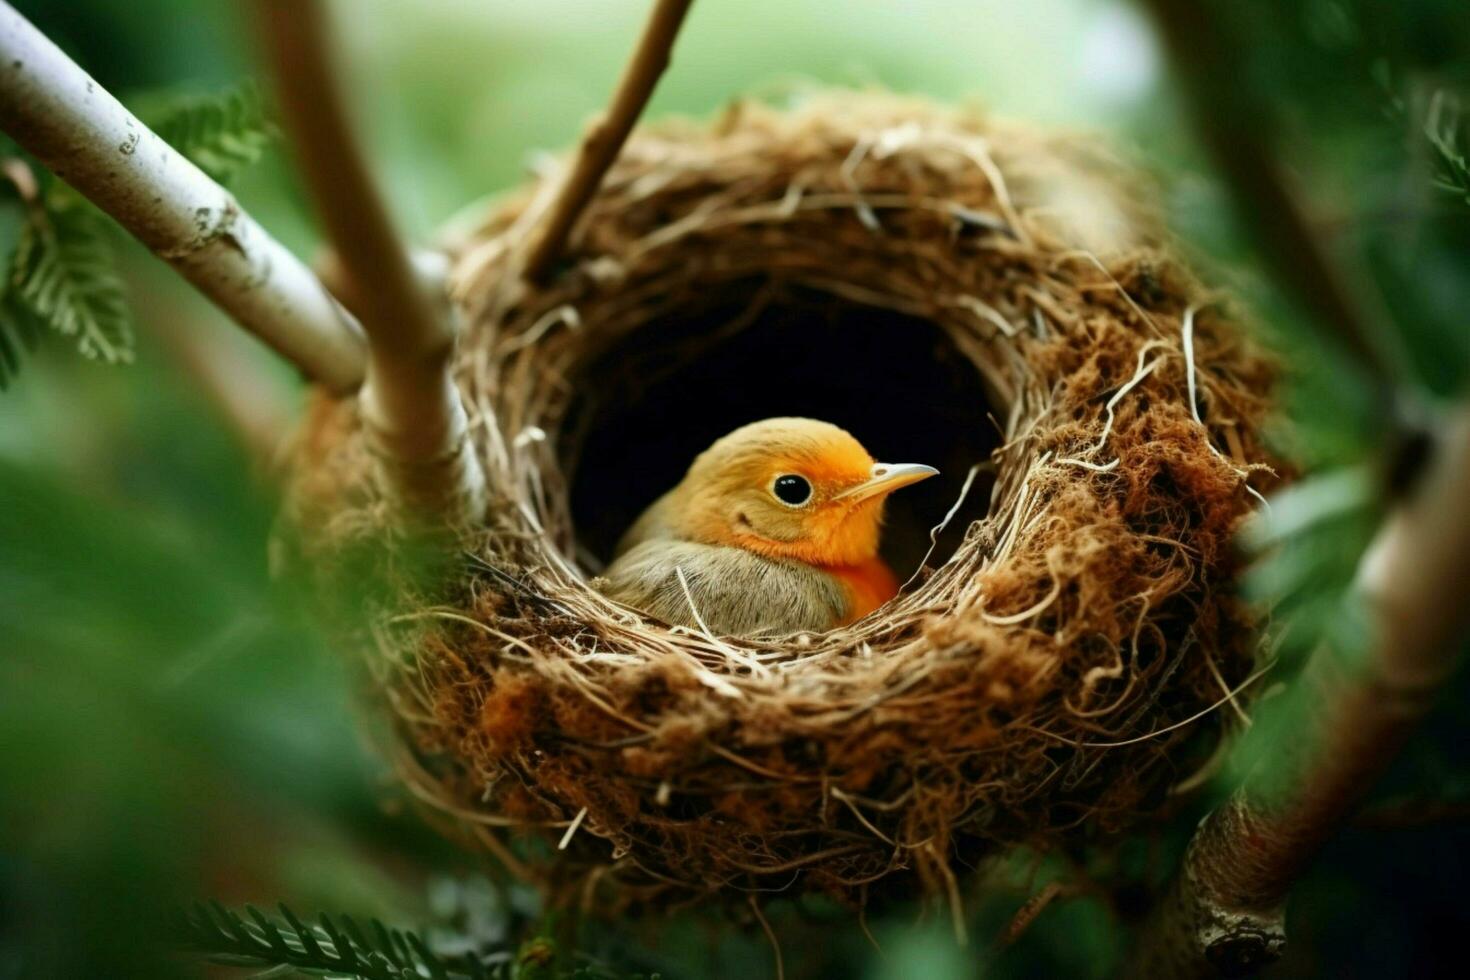 süß Vogel Nest foto